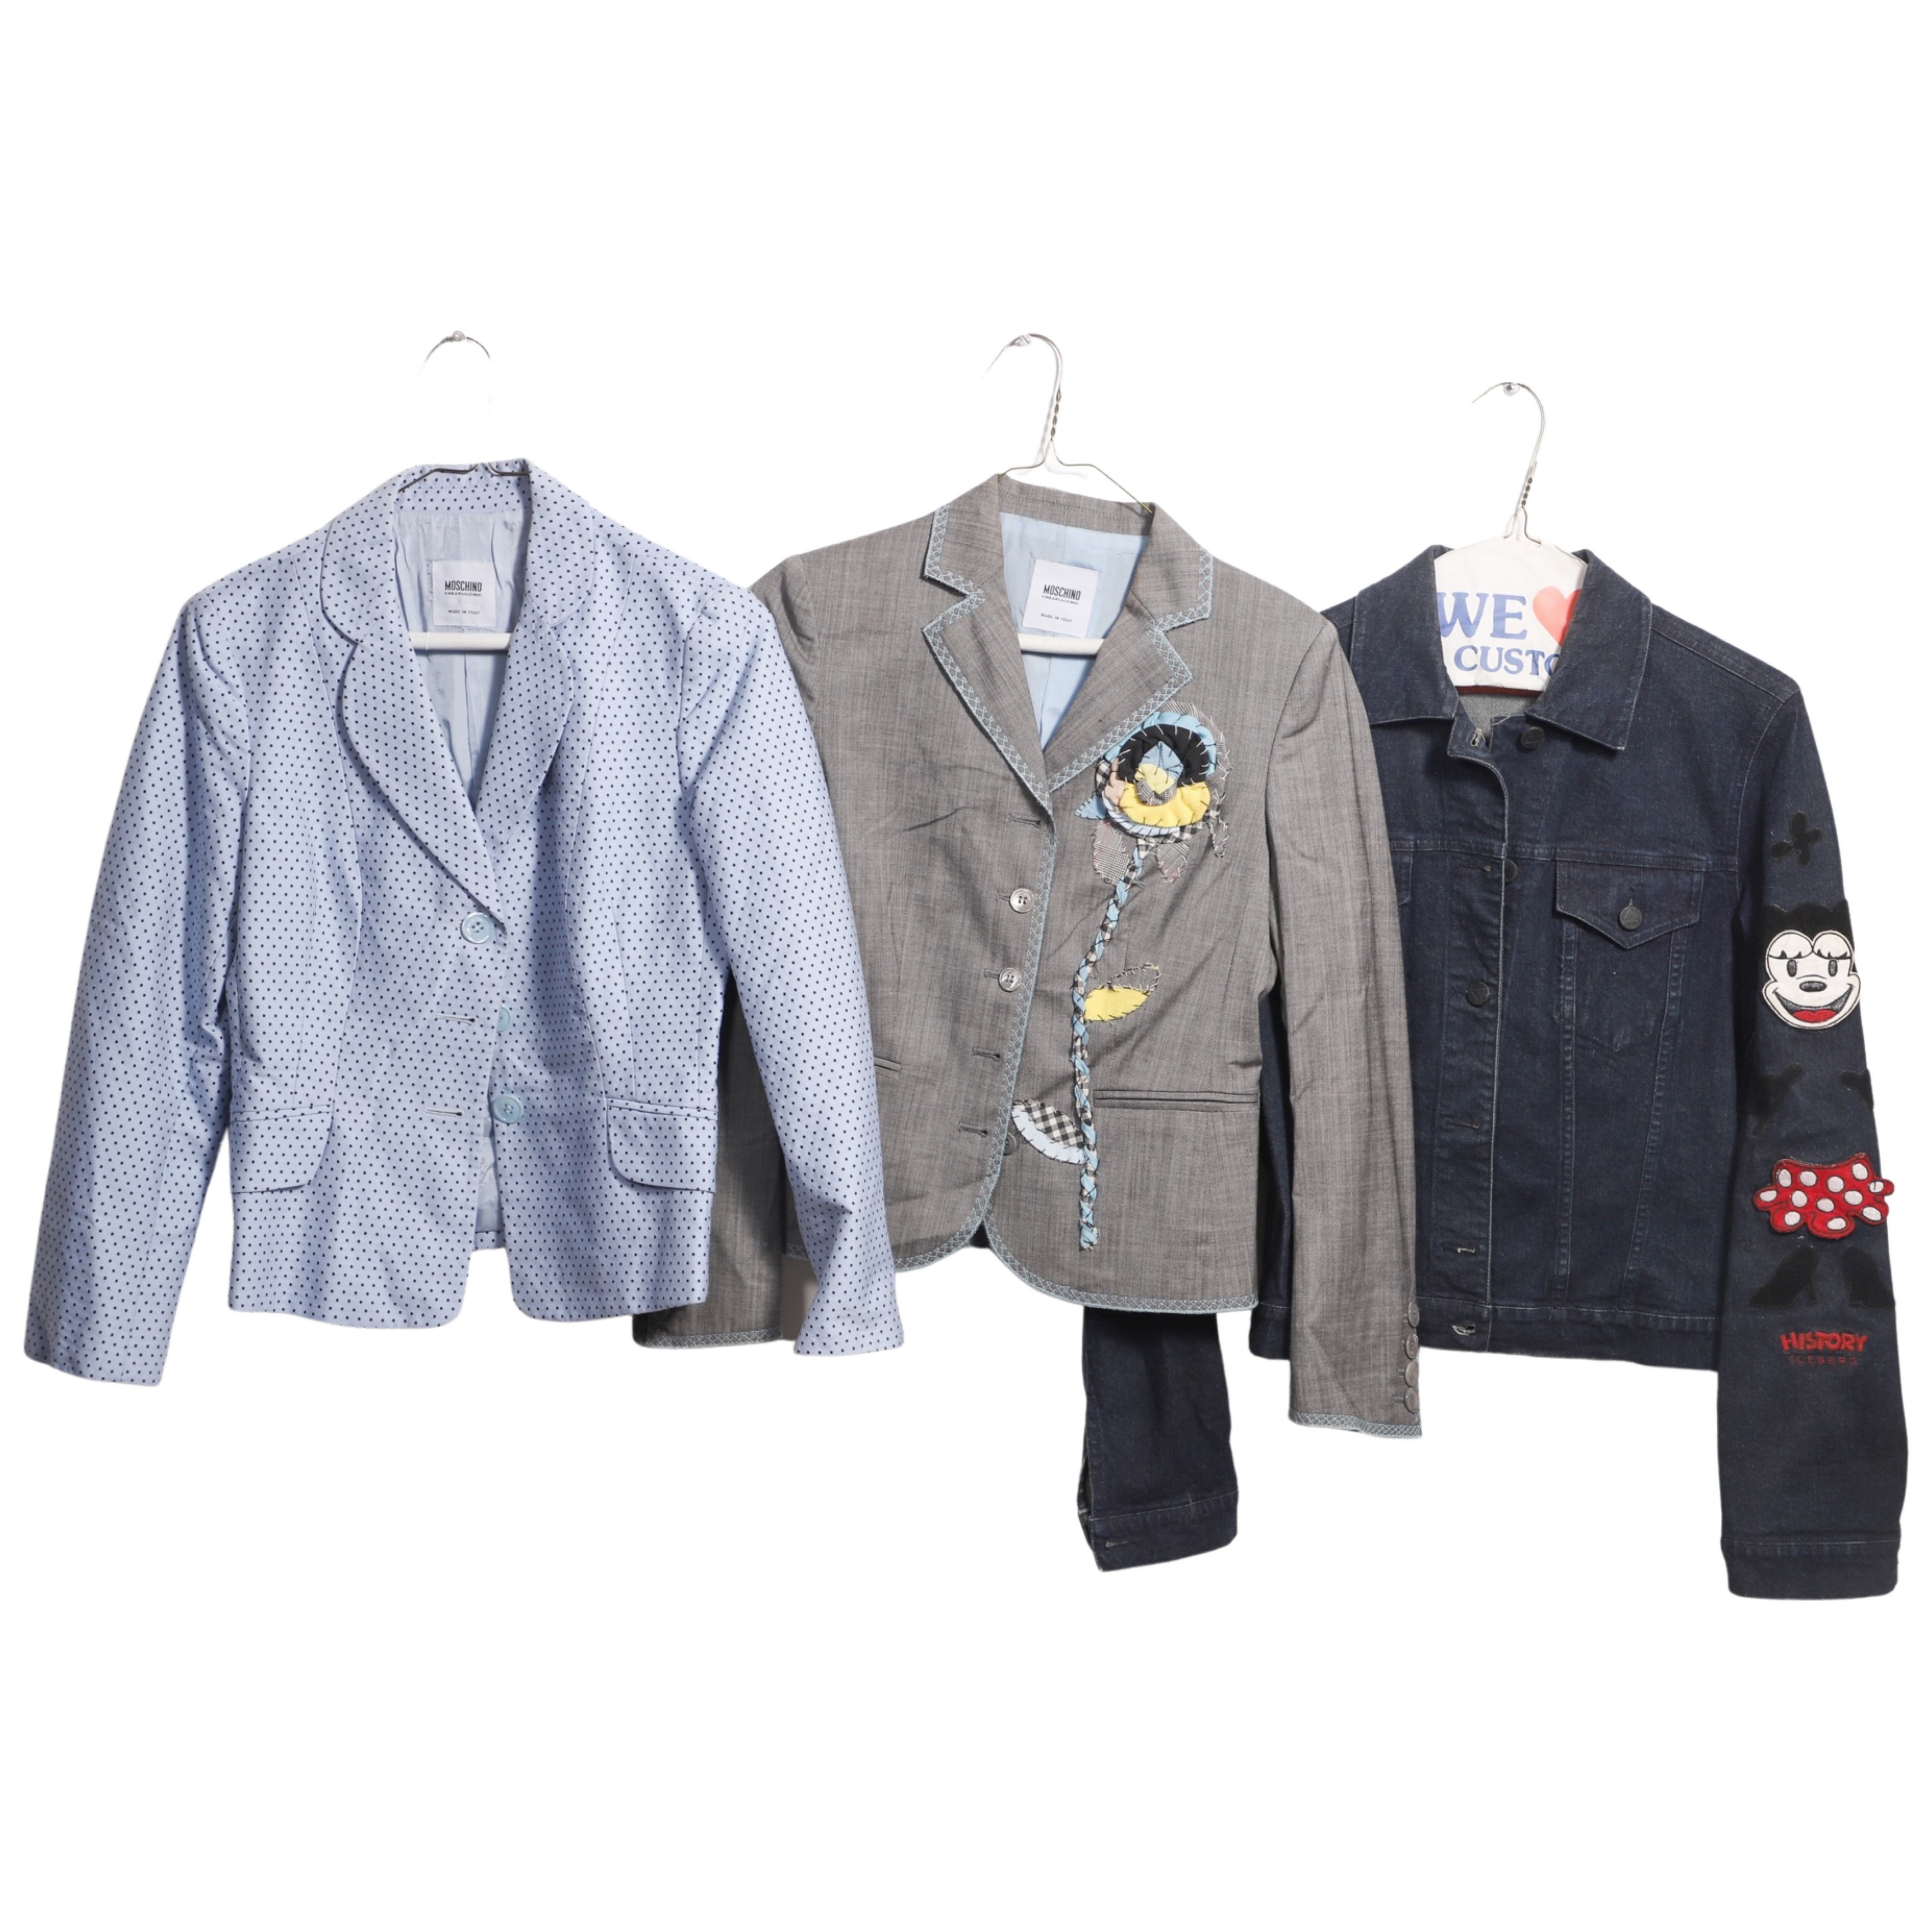 (3) Designer blazers and jackets